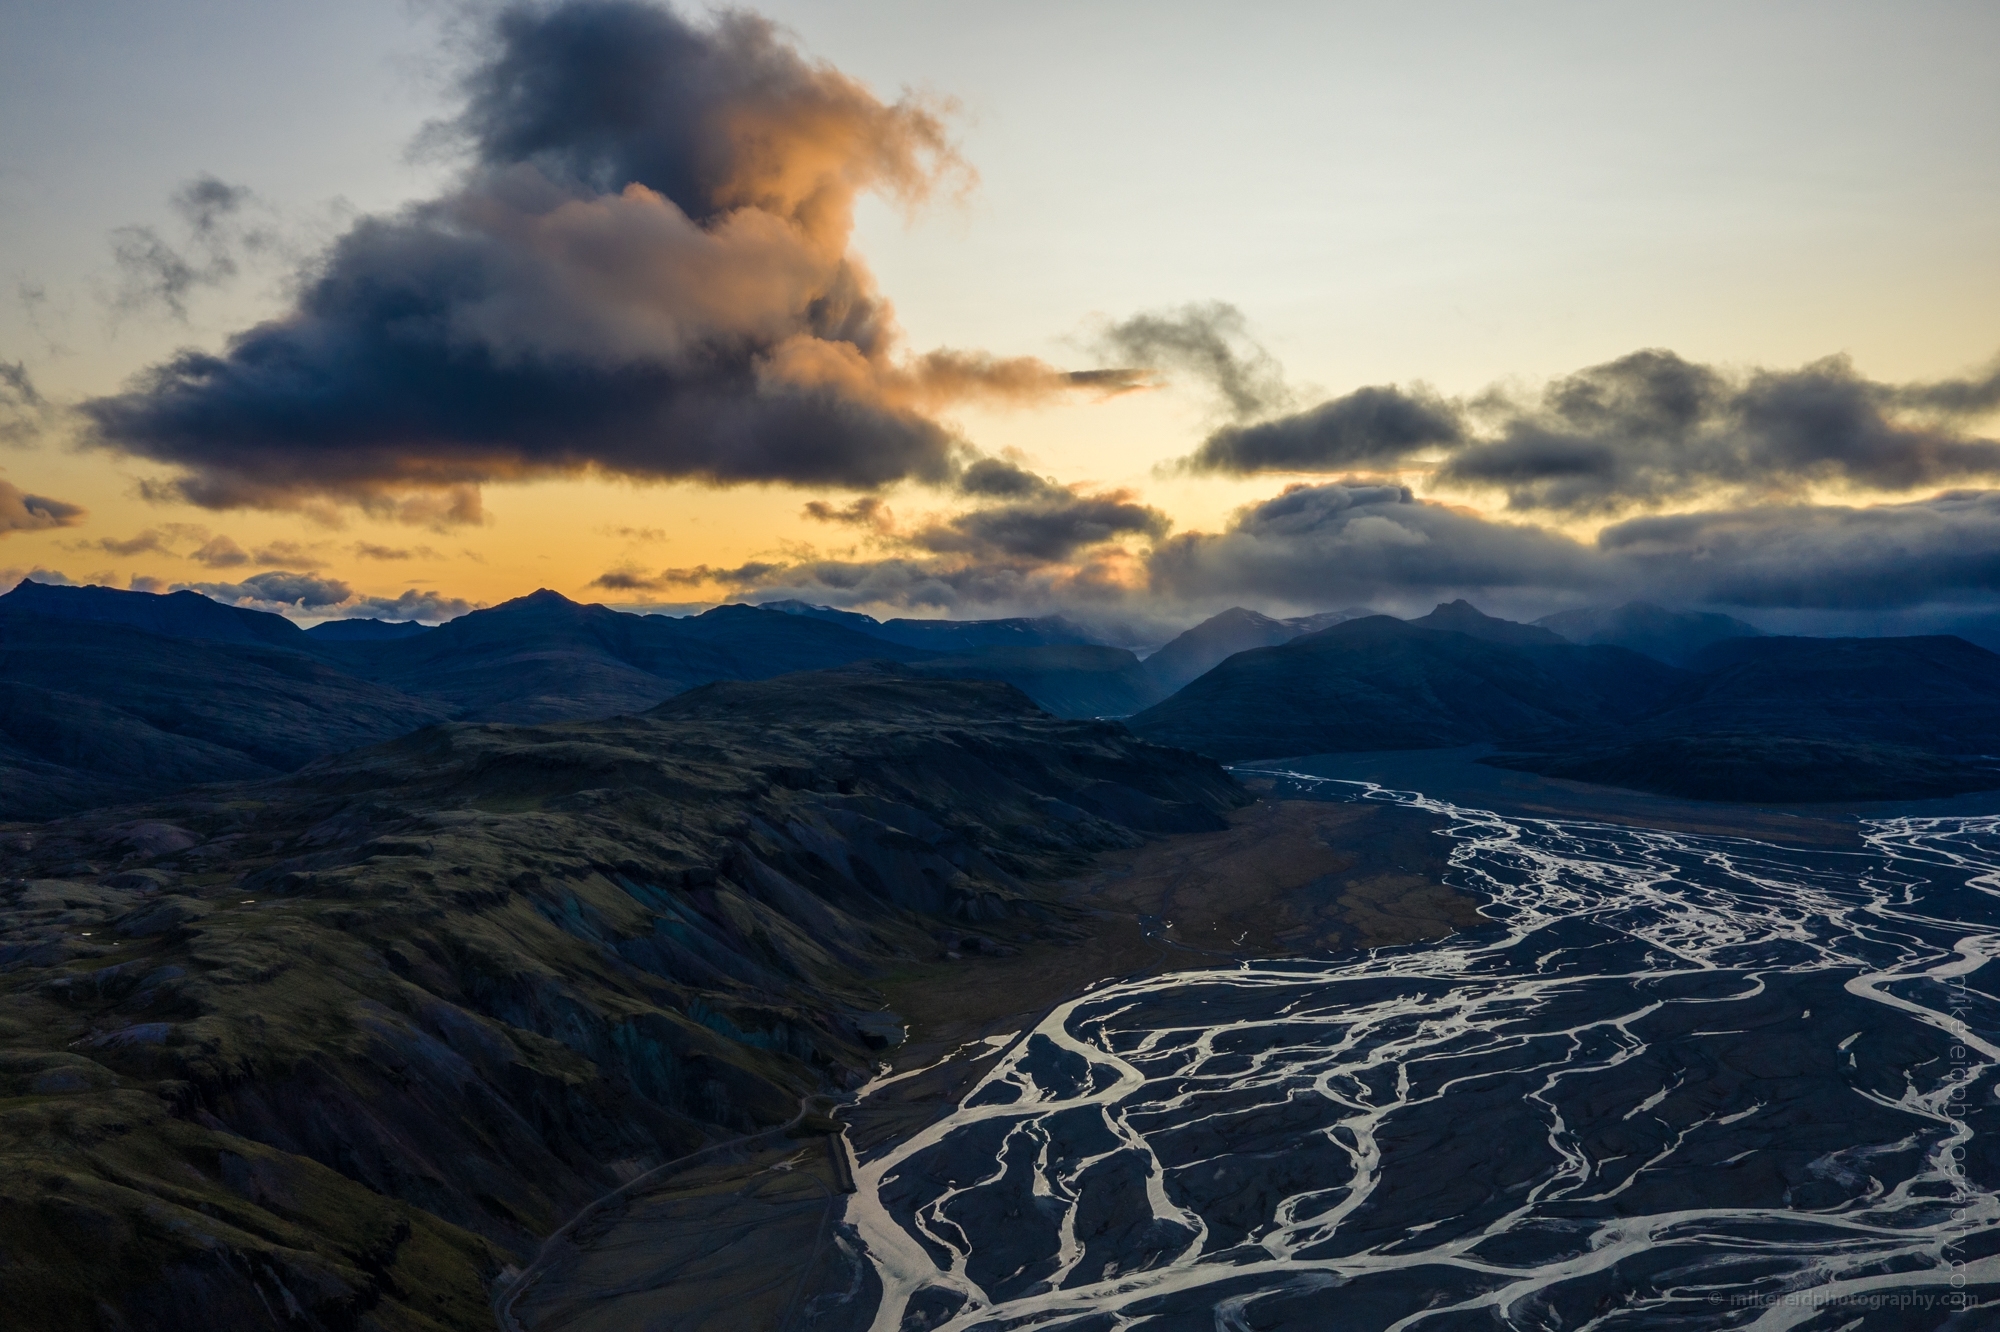 Over Iceland Braided River Sunset DJI Mavic Pro 2 Drone.jpg 